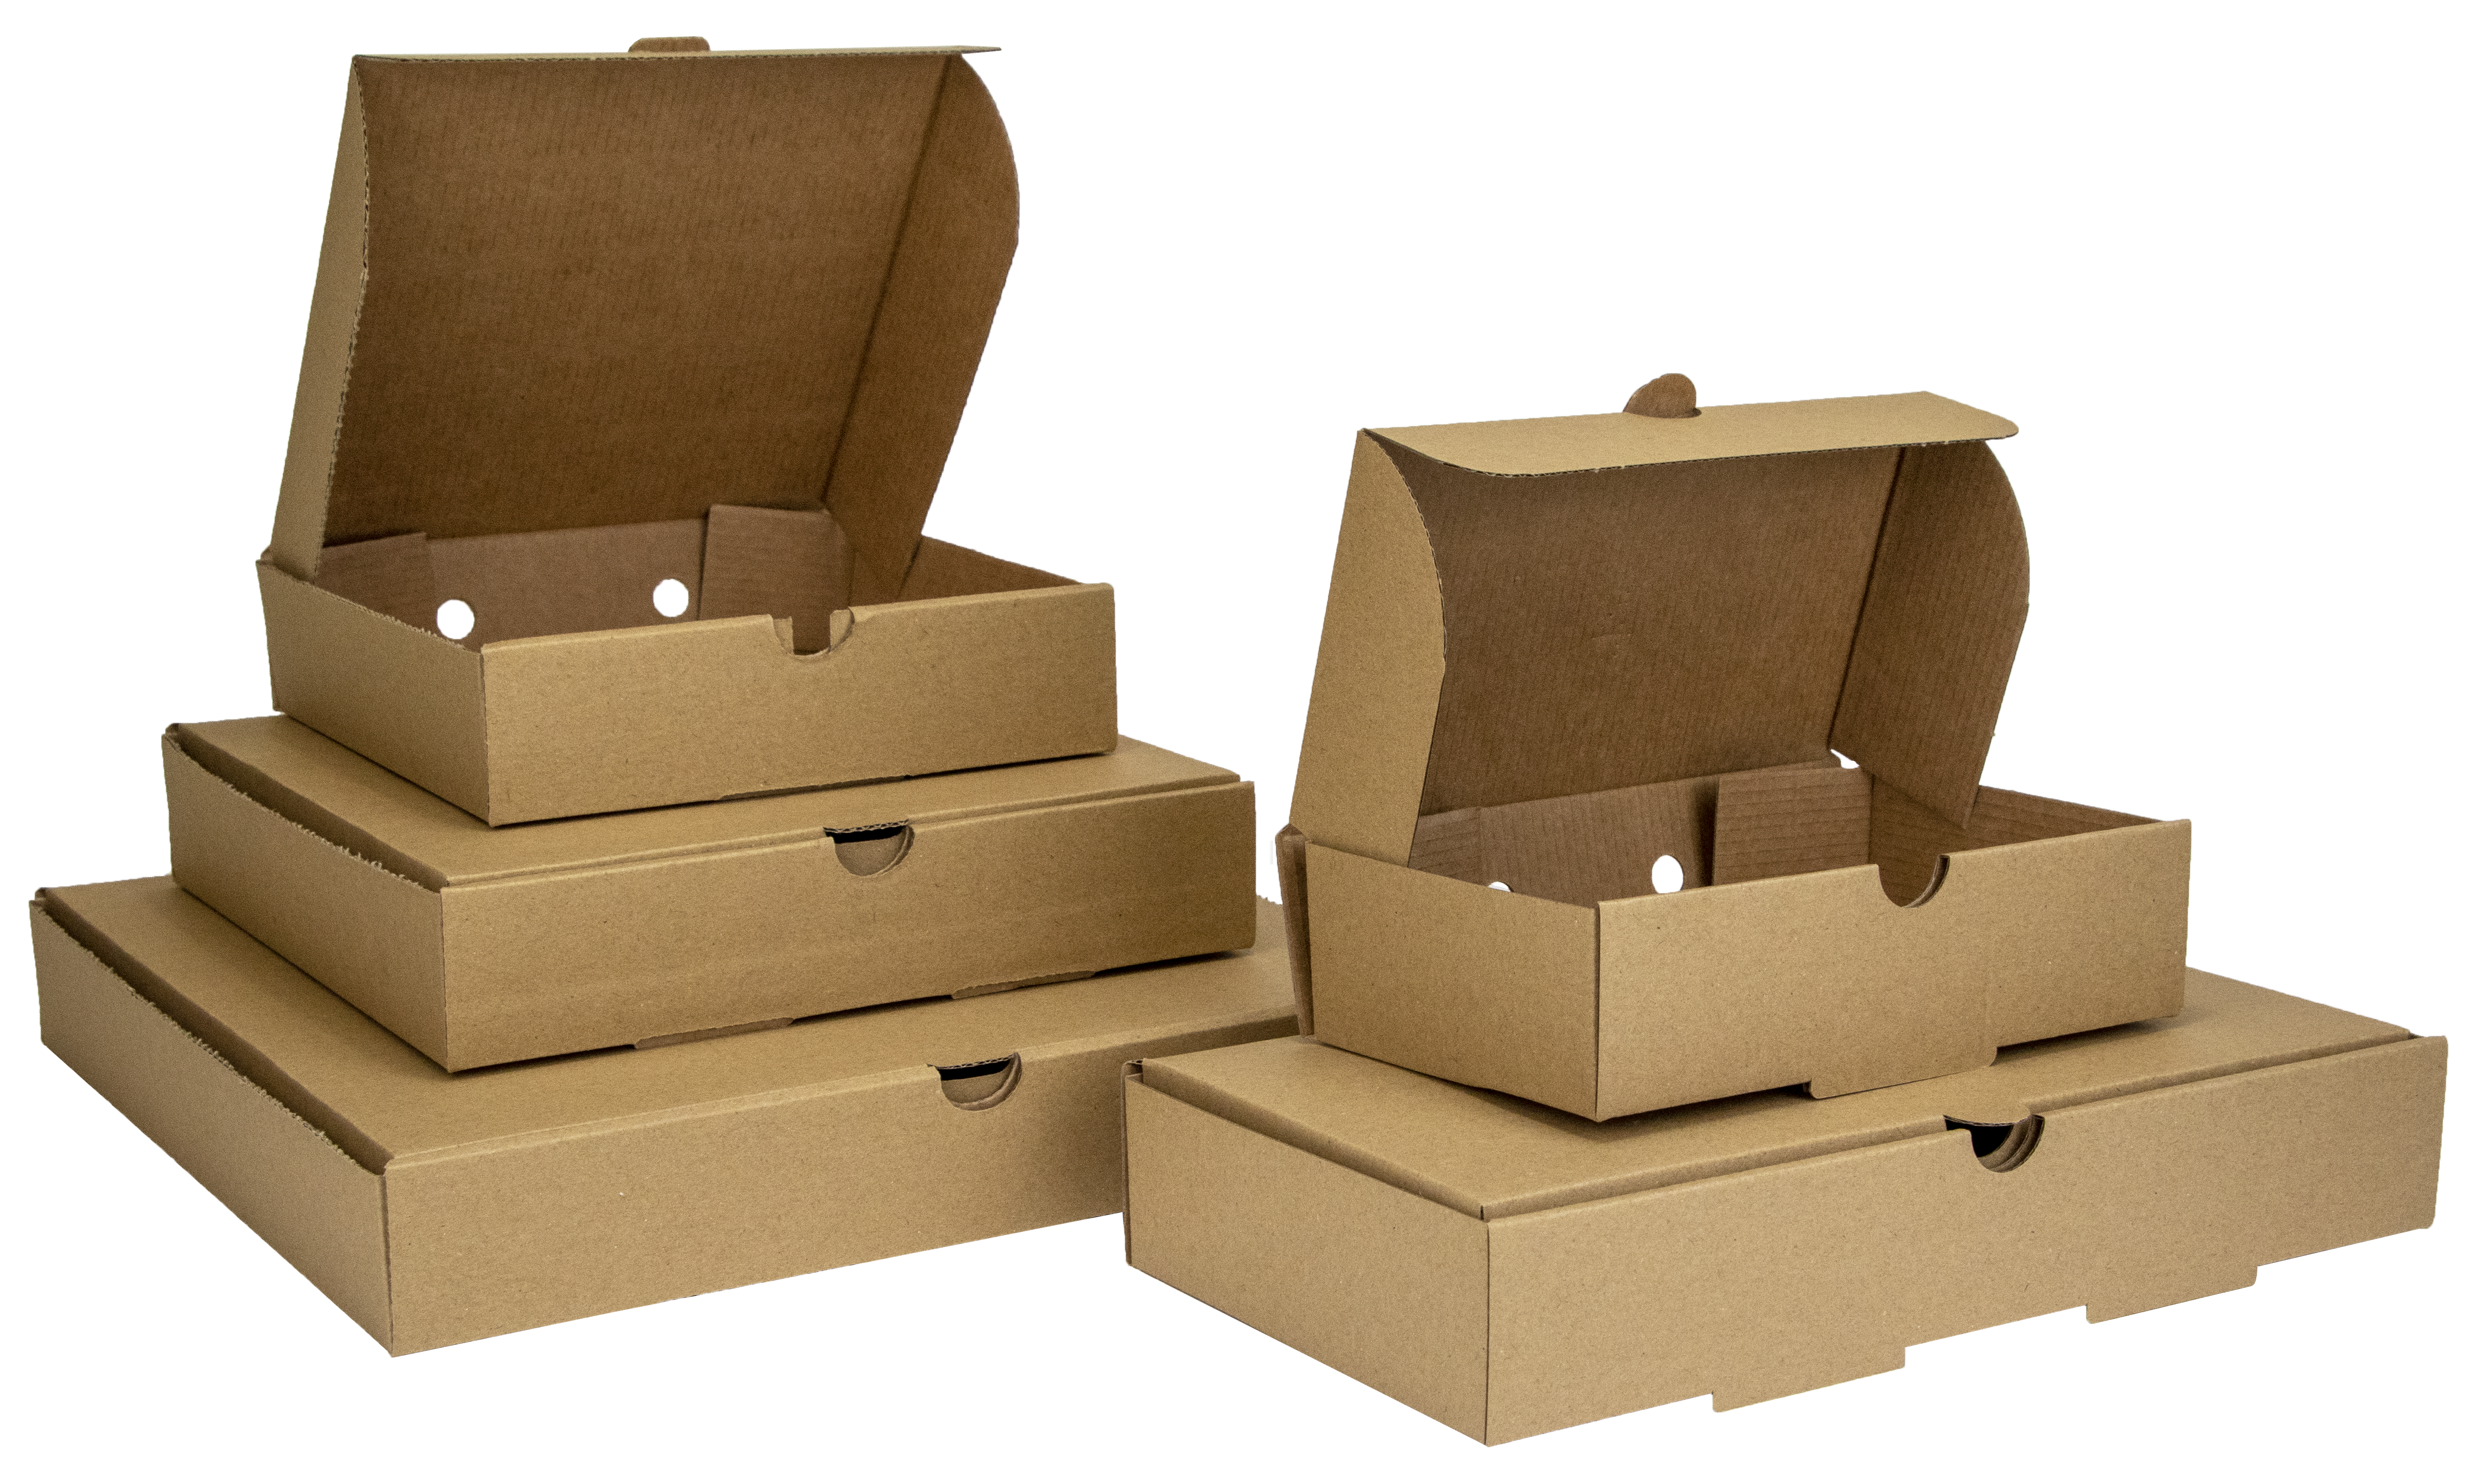 Pizza Boxes, Fish & Chip Boxes